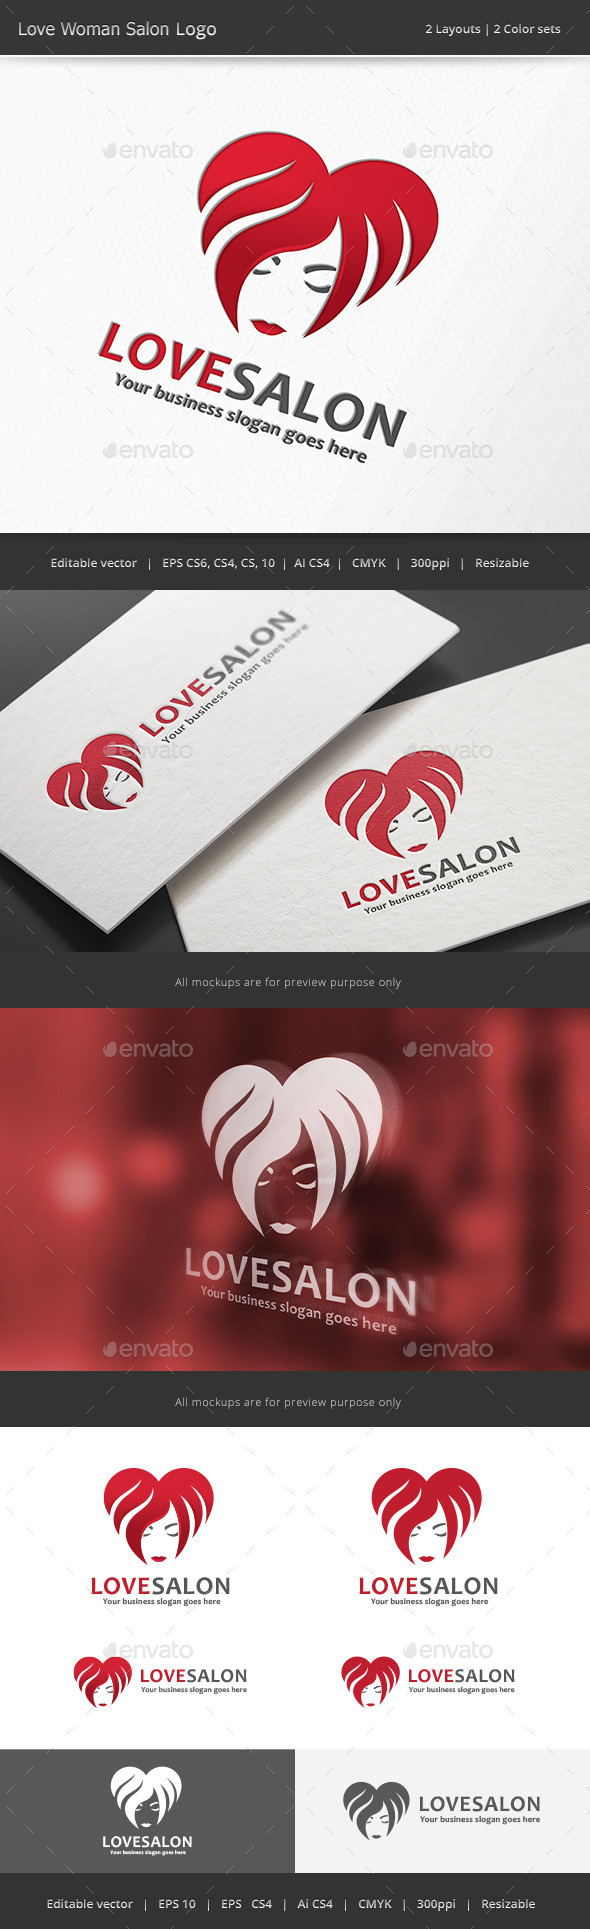 Love Woman Salon Logo